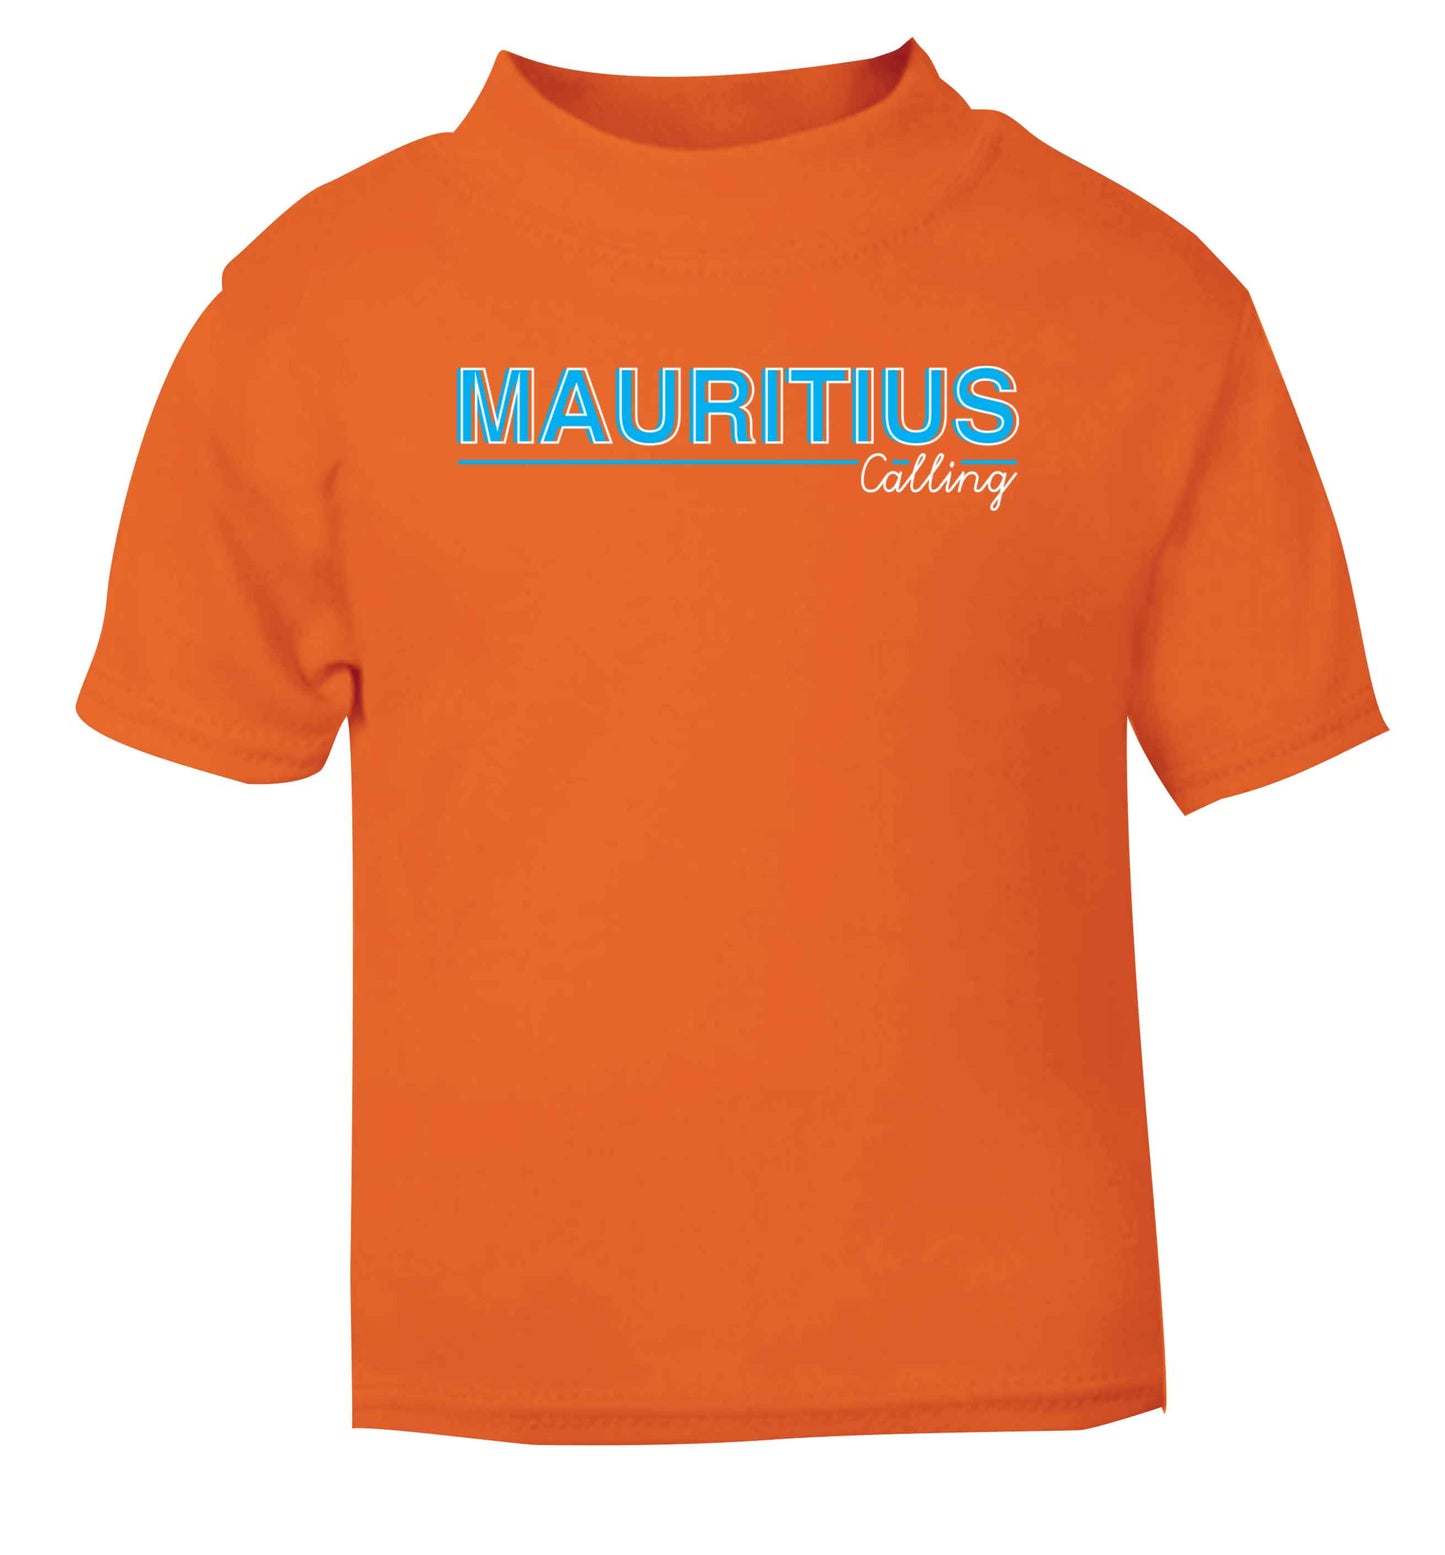 Mauritius calling orange Baby Toddler Tshirt 2 Years